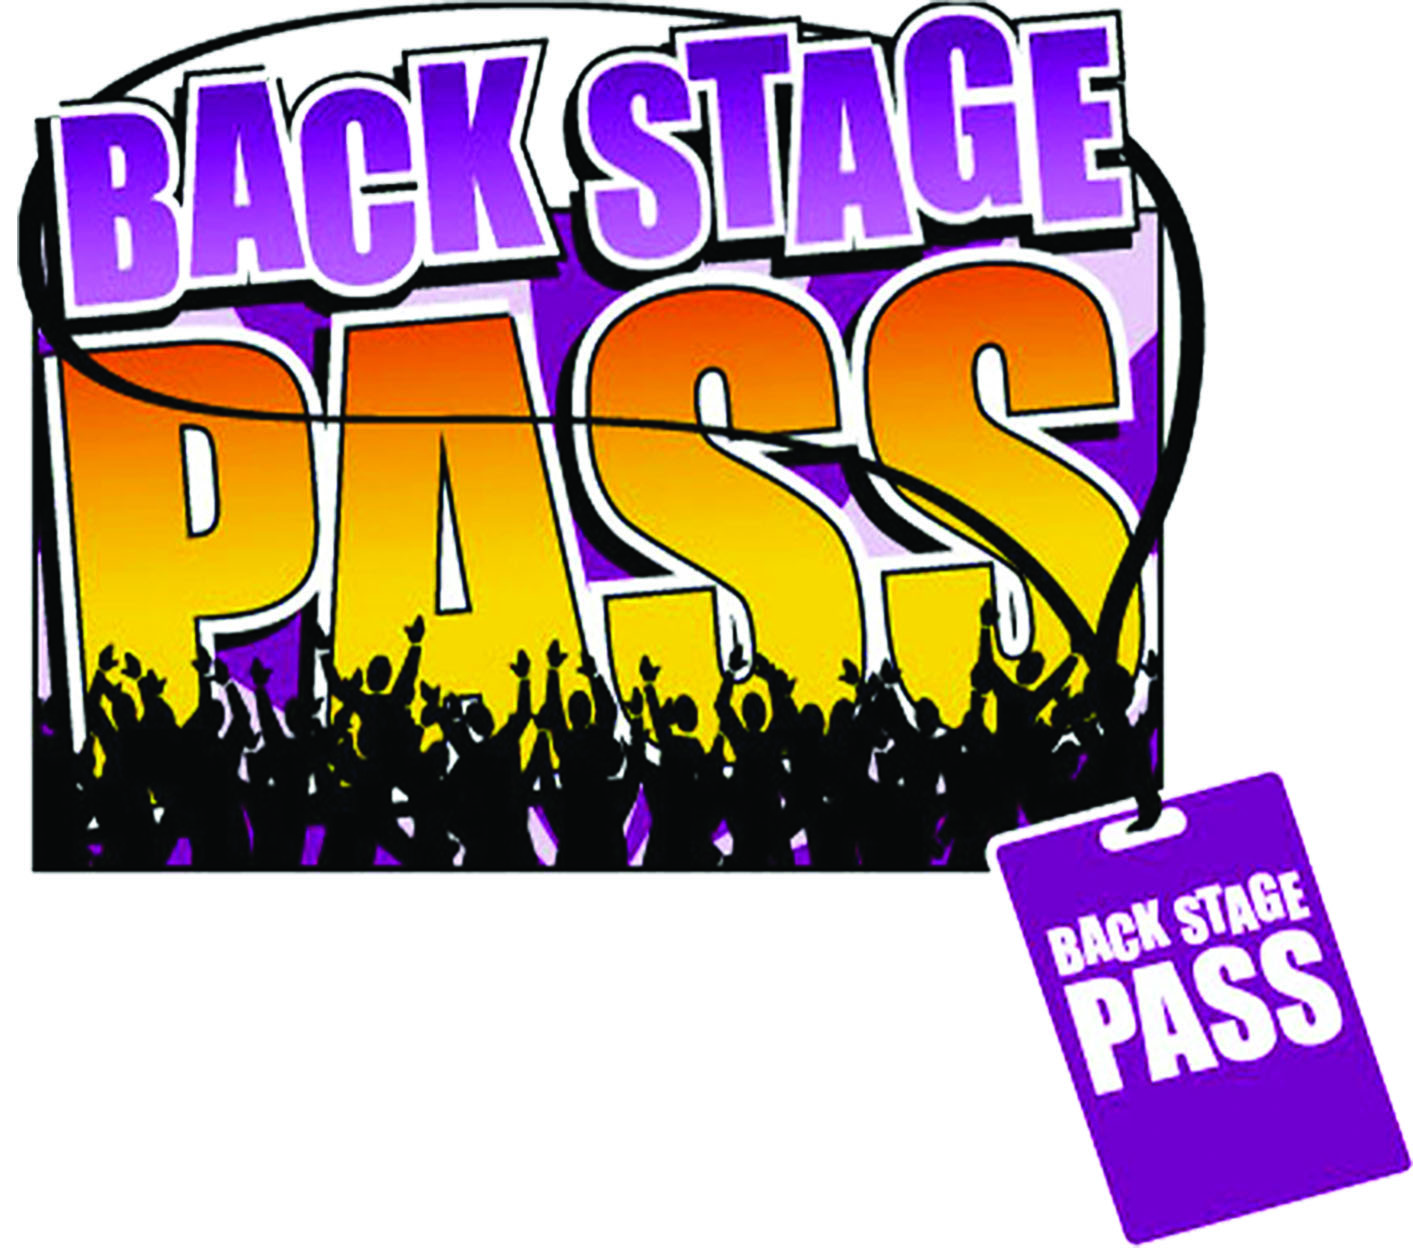 Backstage Pass #20